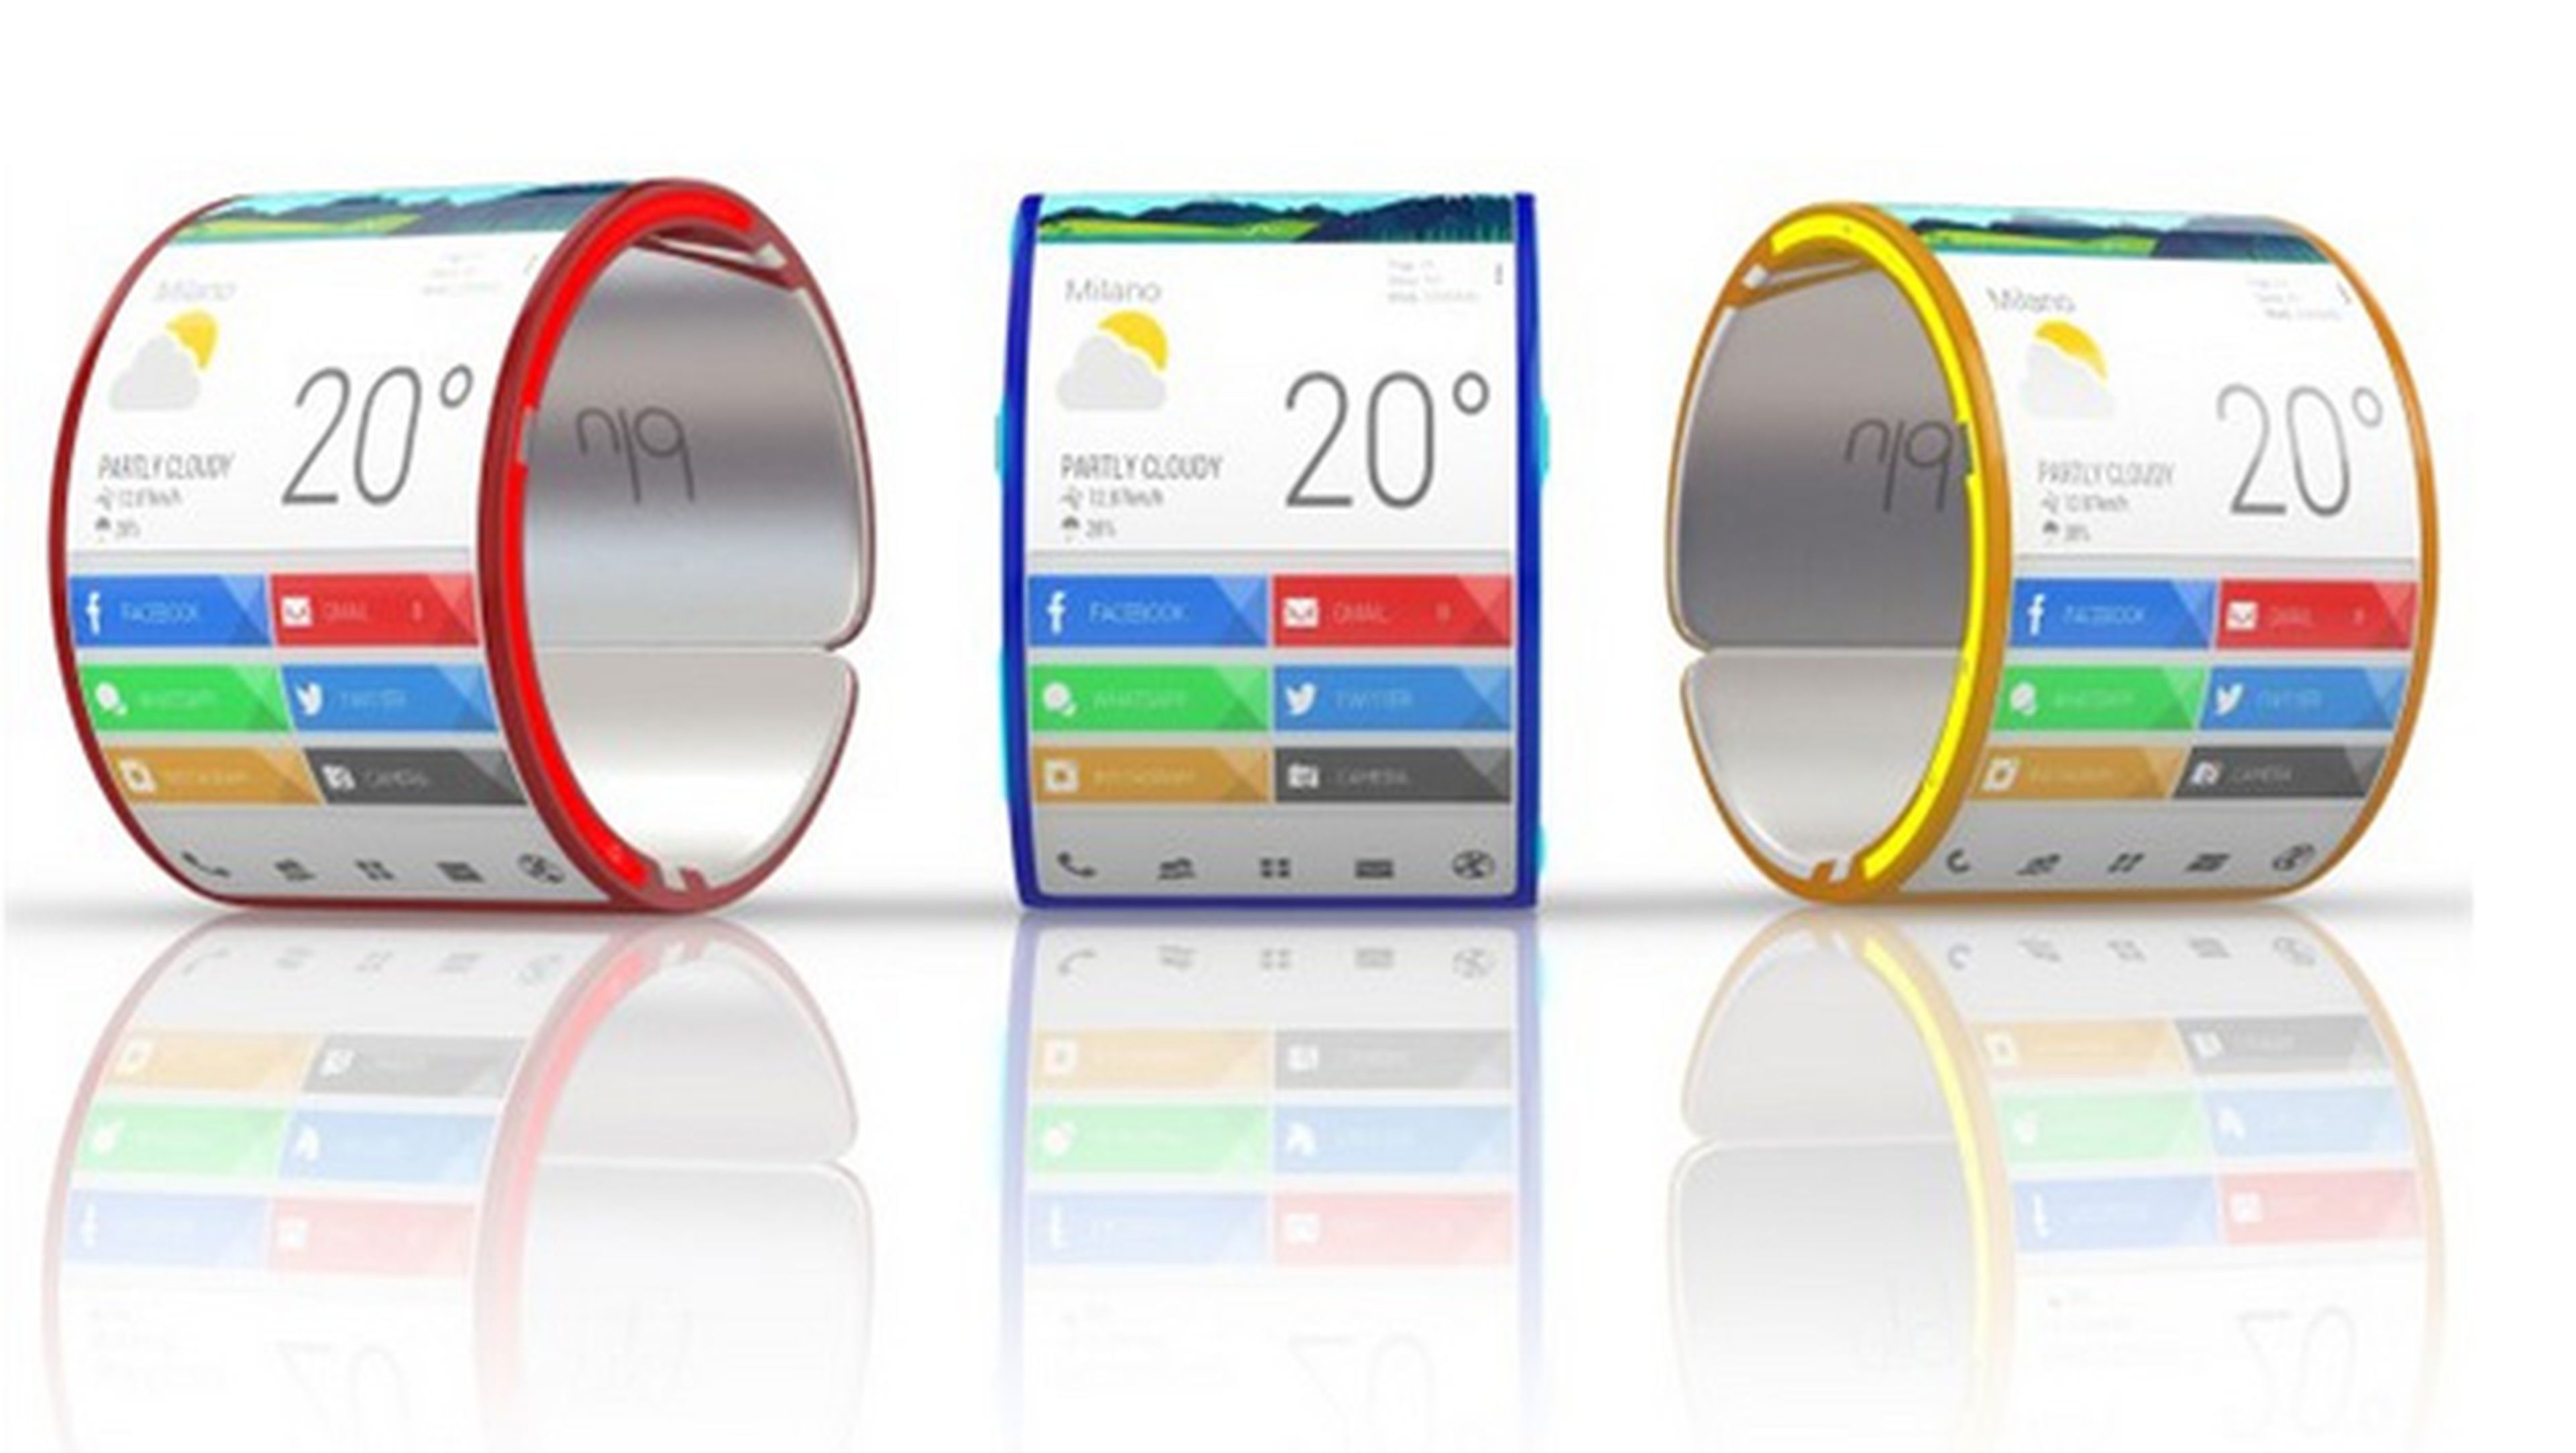 Blu móvil flexible que podrás usar como smartwatch